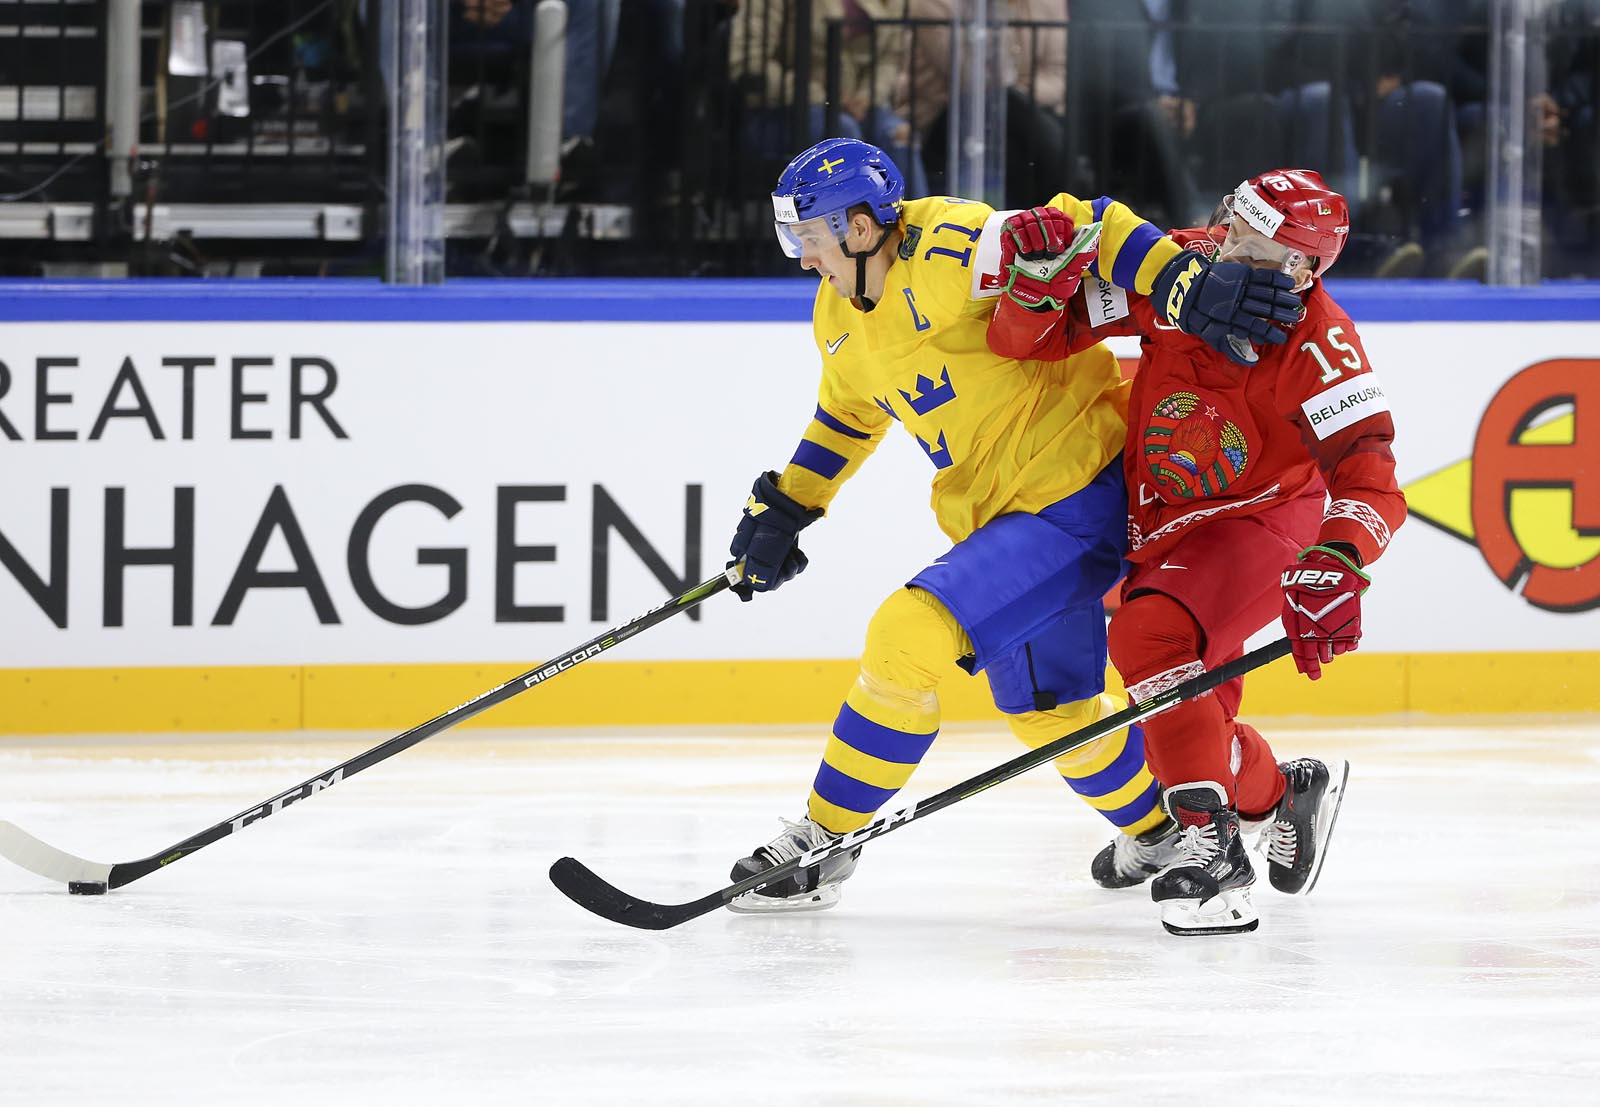 2018 IIHF Ice Hockey World Championship